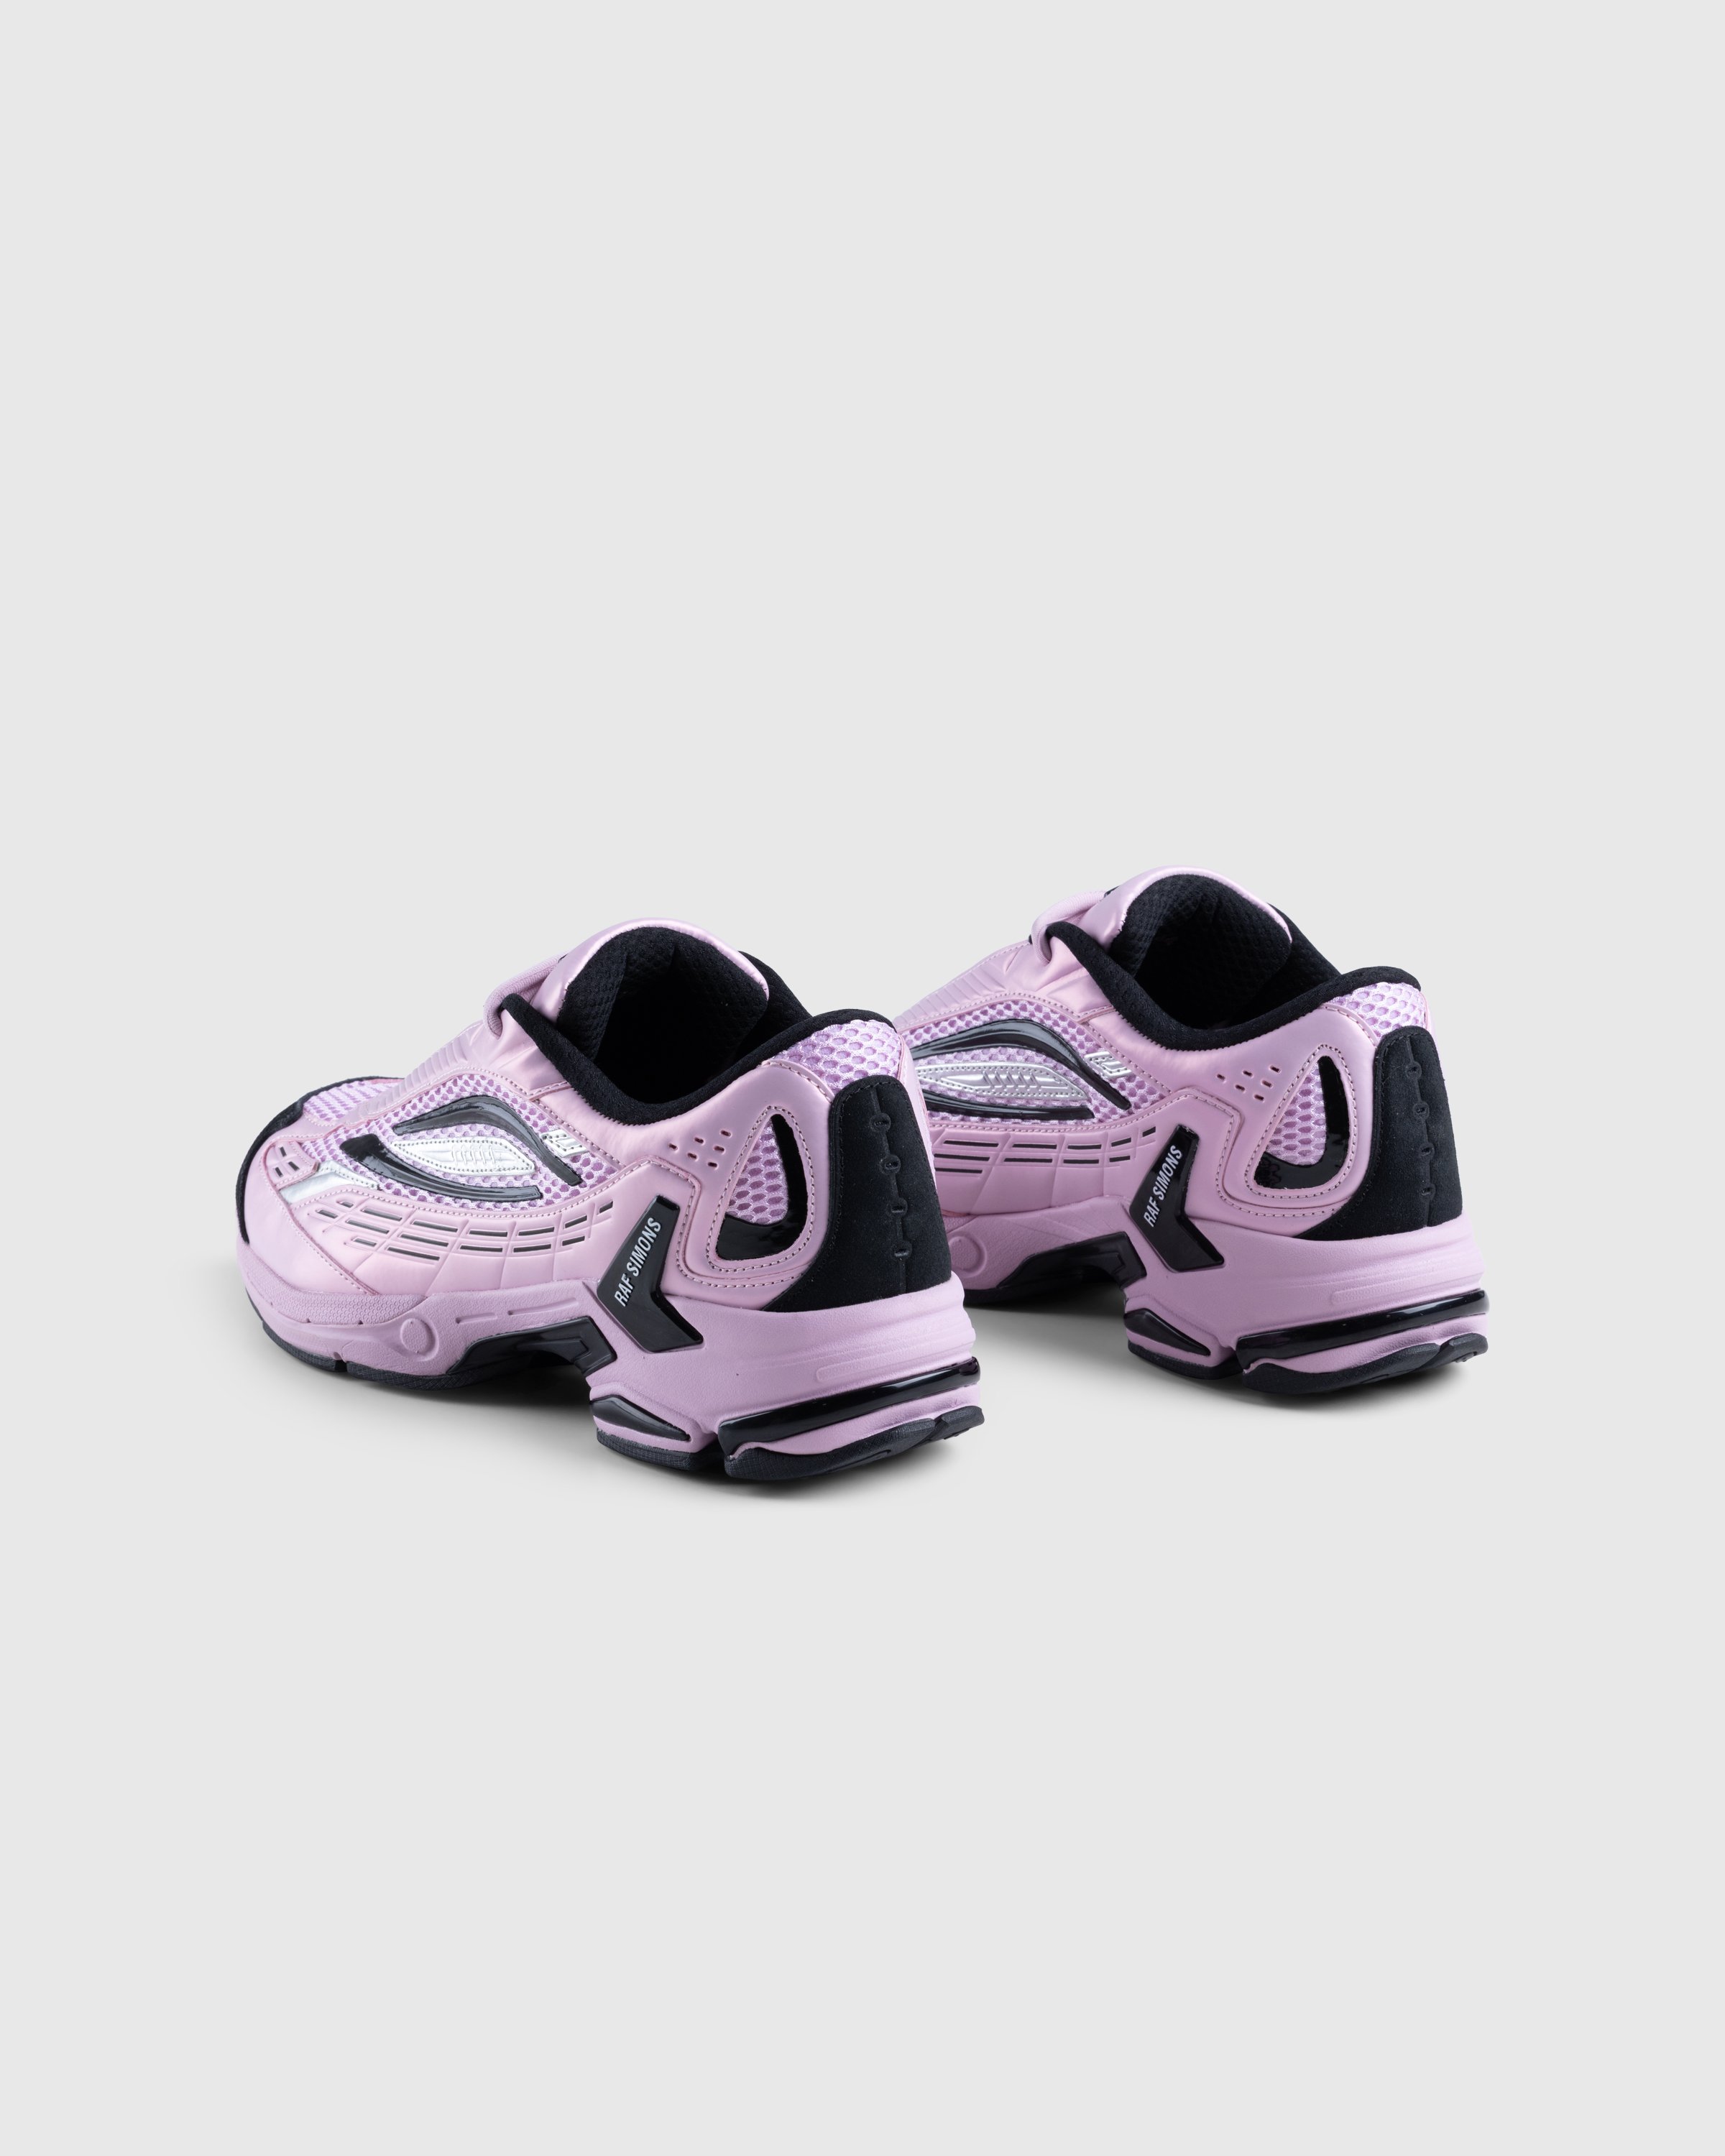 Raf Simons - ULTRASCEPTRE 0044 - Footwear - Pink - Image 4